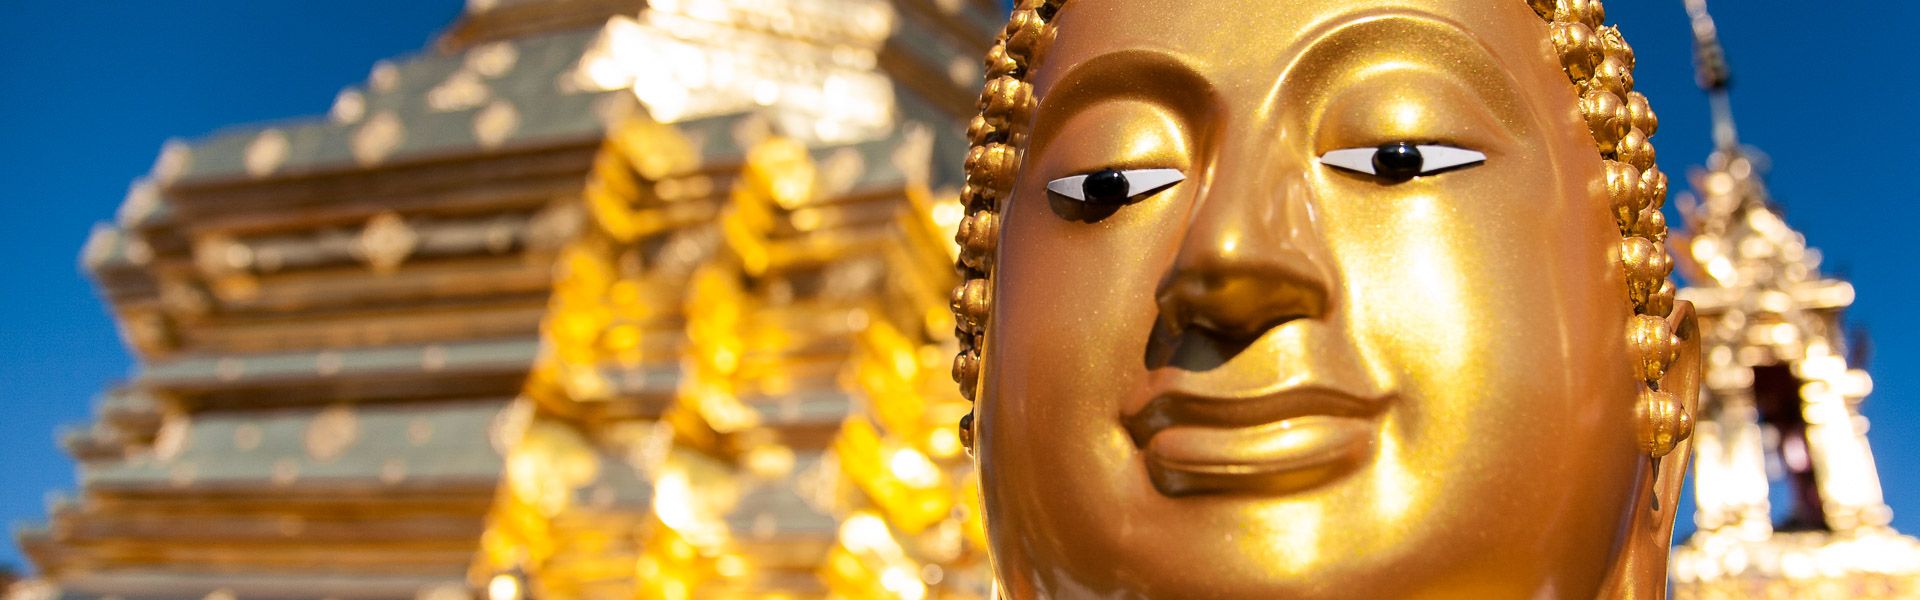 Die Goldene Chedi in Chiang Mai |  Dirk Bleyer / Chamleon